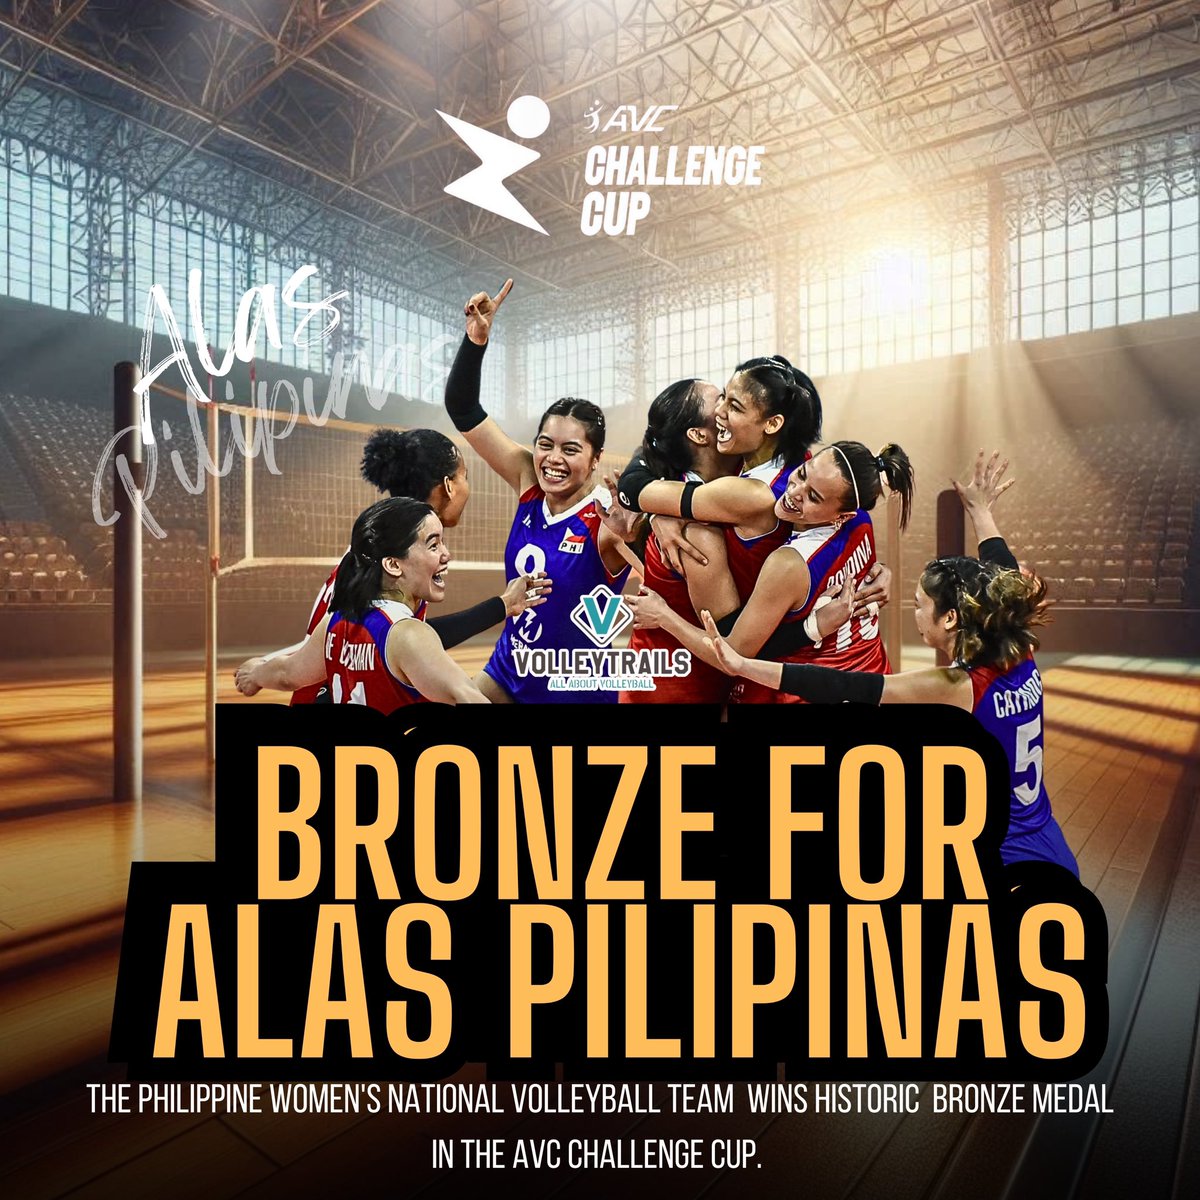 JUST IN: 🇵🇭 Alas Pilipinas wins historic bronze medal in #AVCChallengeCup! Congratulations, ladies! 👏🔥🇵🇭